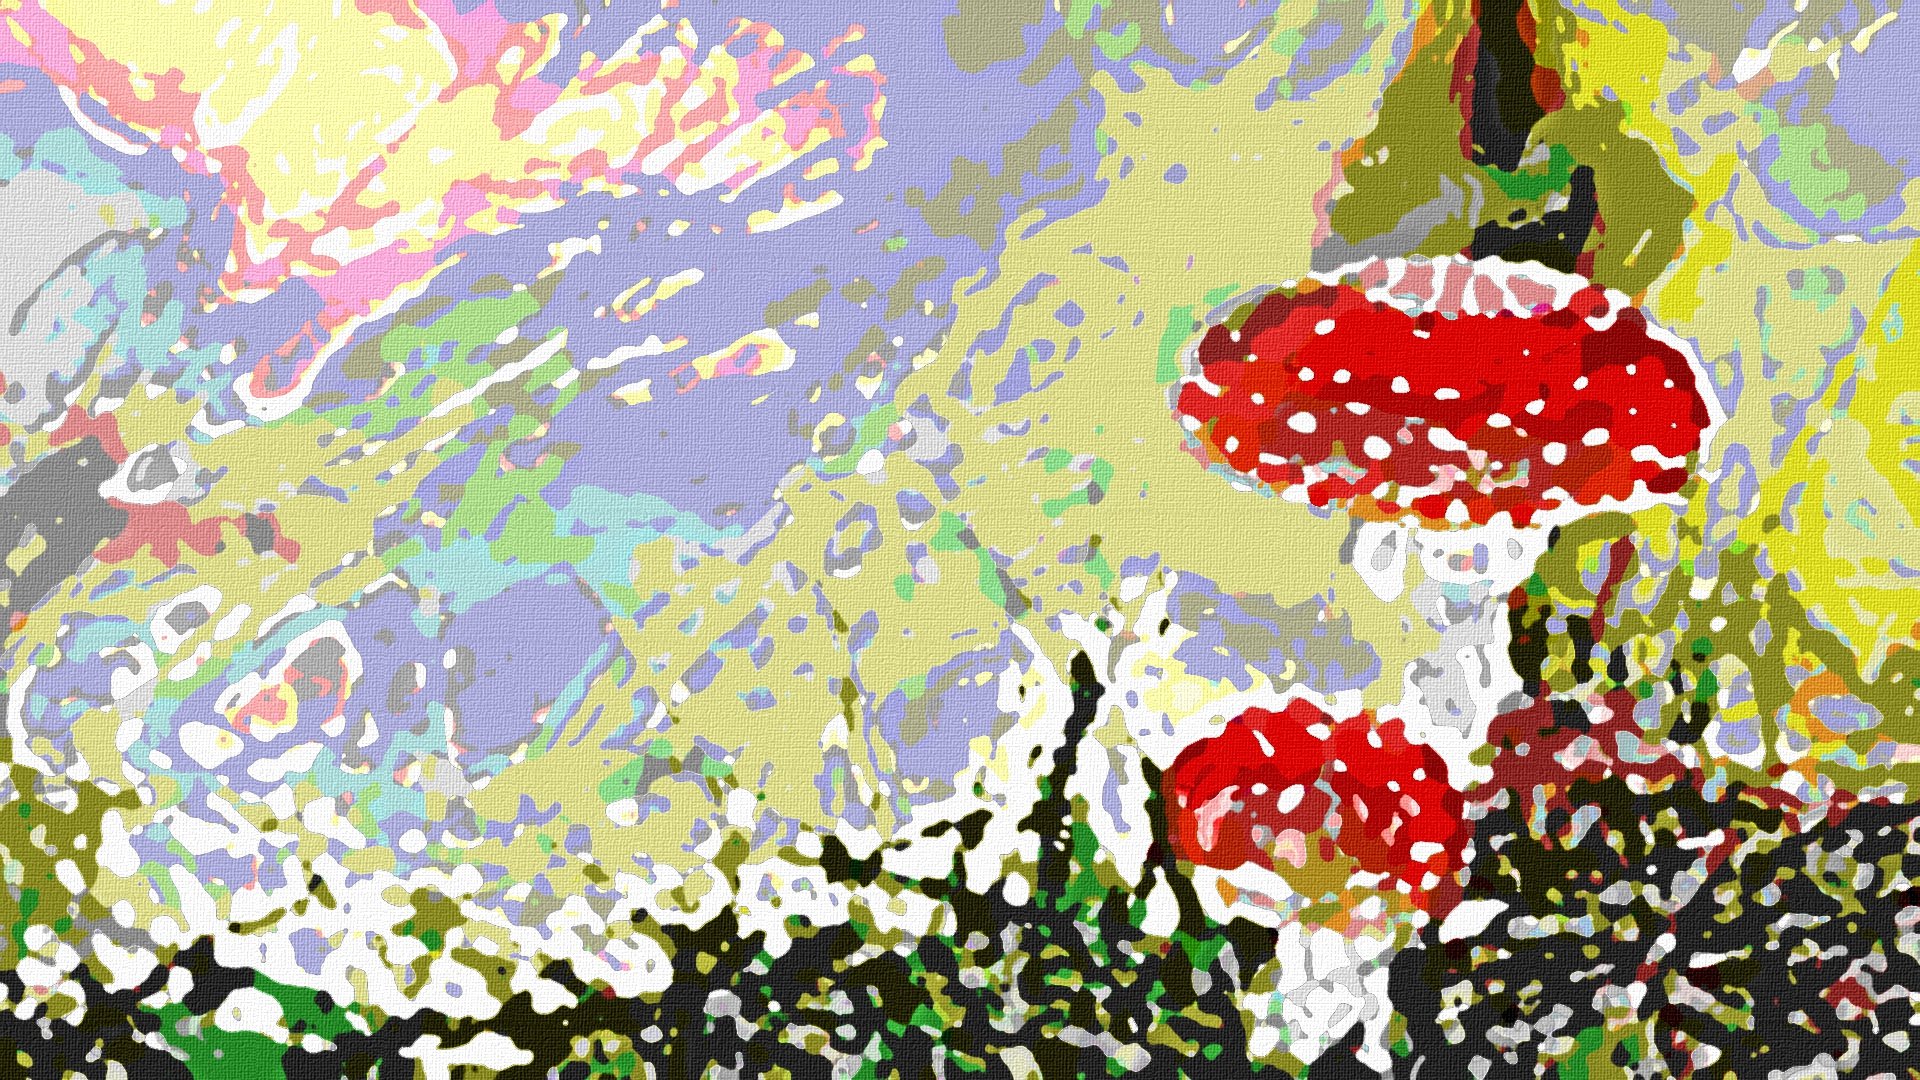 Wild Mushrooms by ApolloSerenus